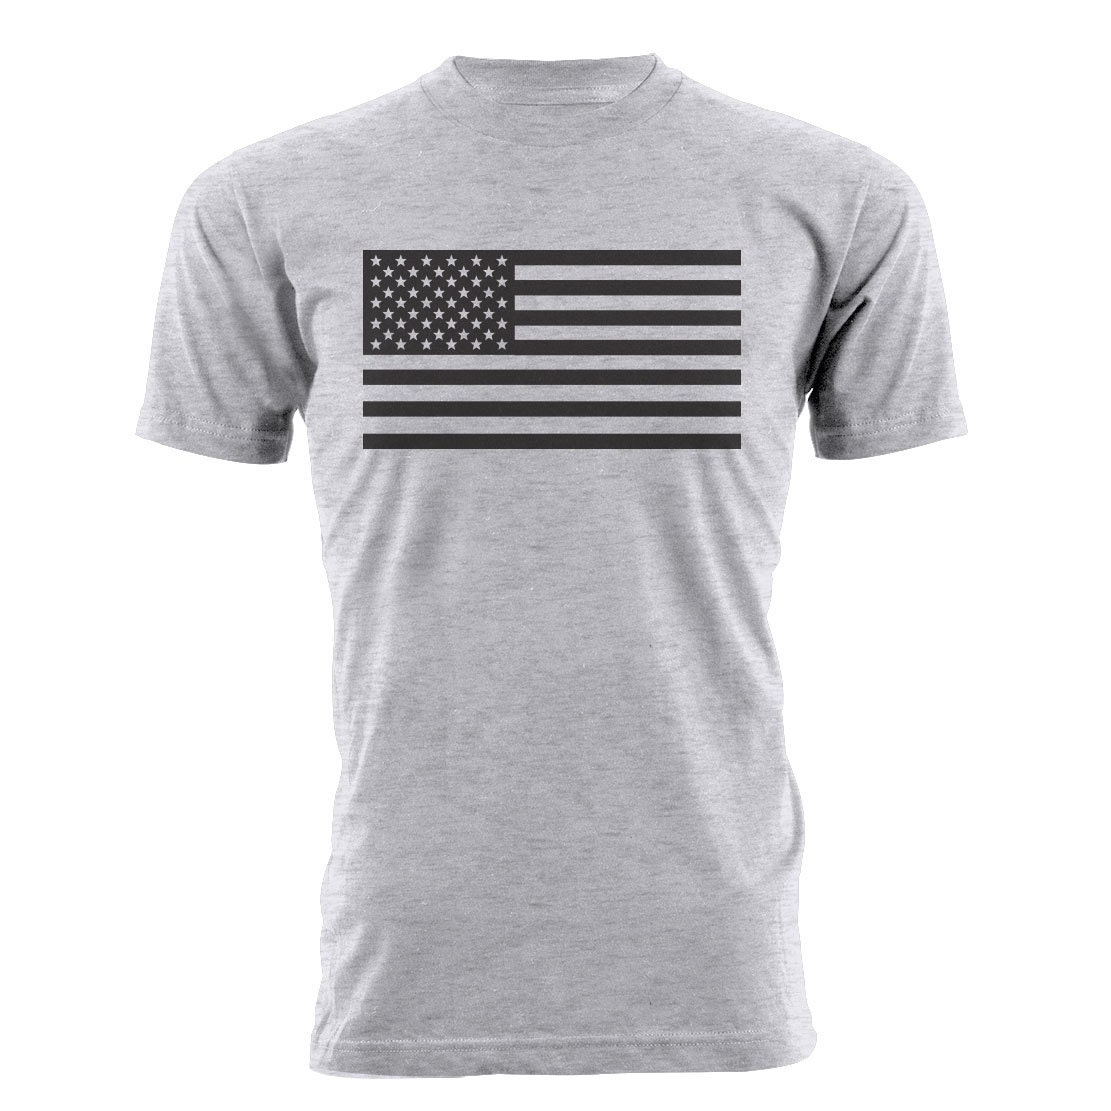 American Flag Shirt Unisex/Men's American Flag T-shirt.